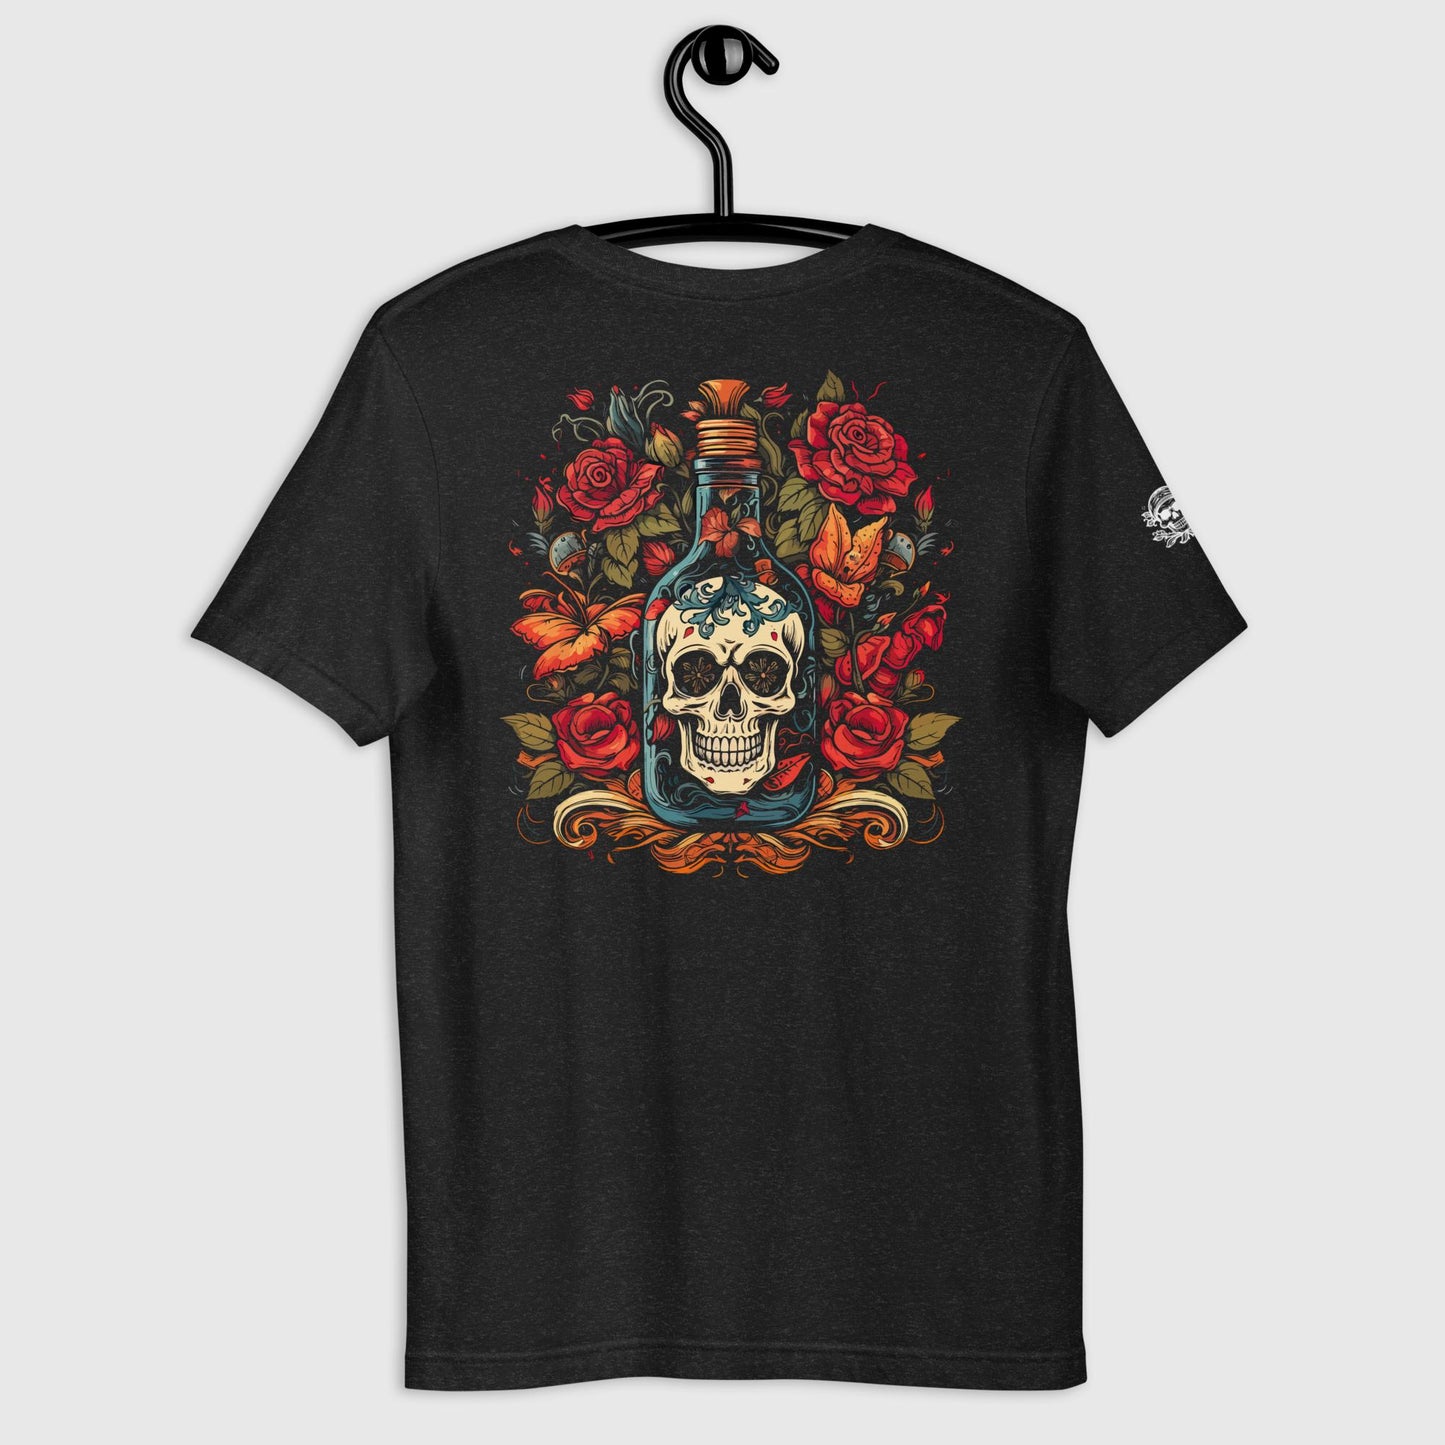 back view of black heather Doomed Desolation Unisex t-shirt displayed on a hanger